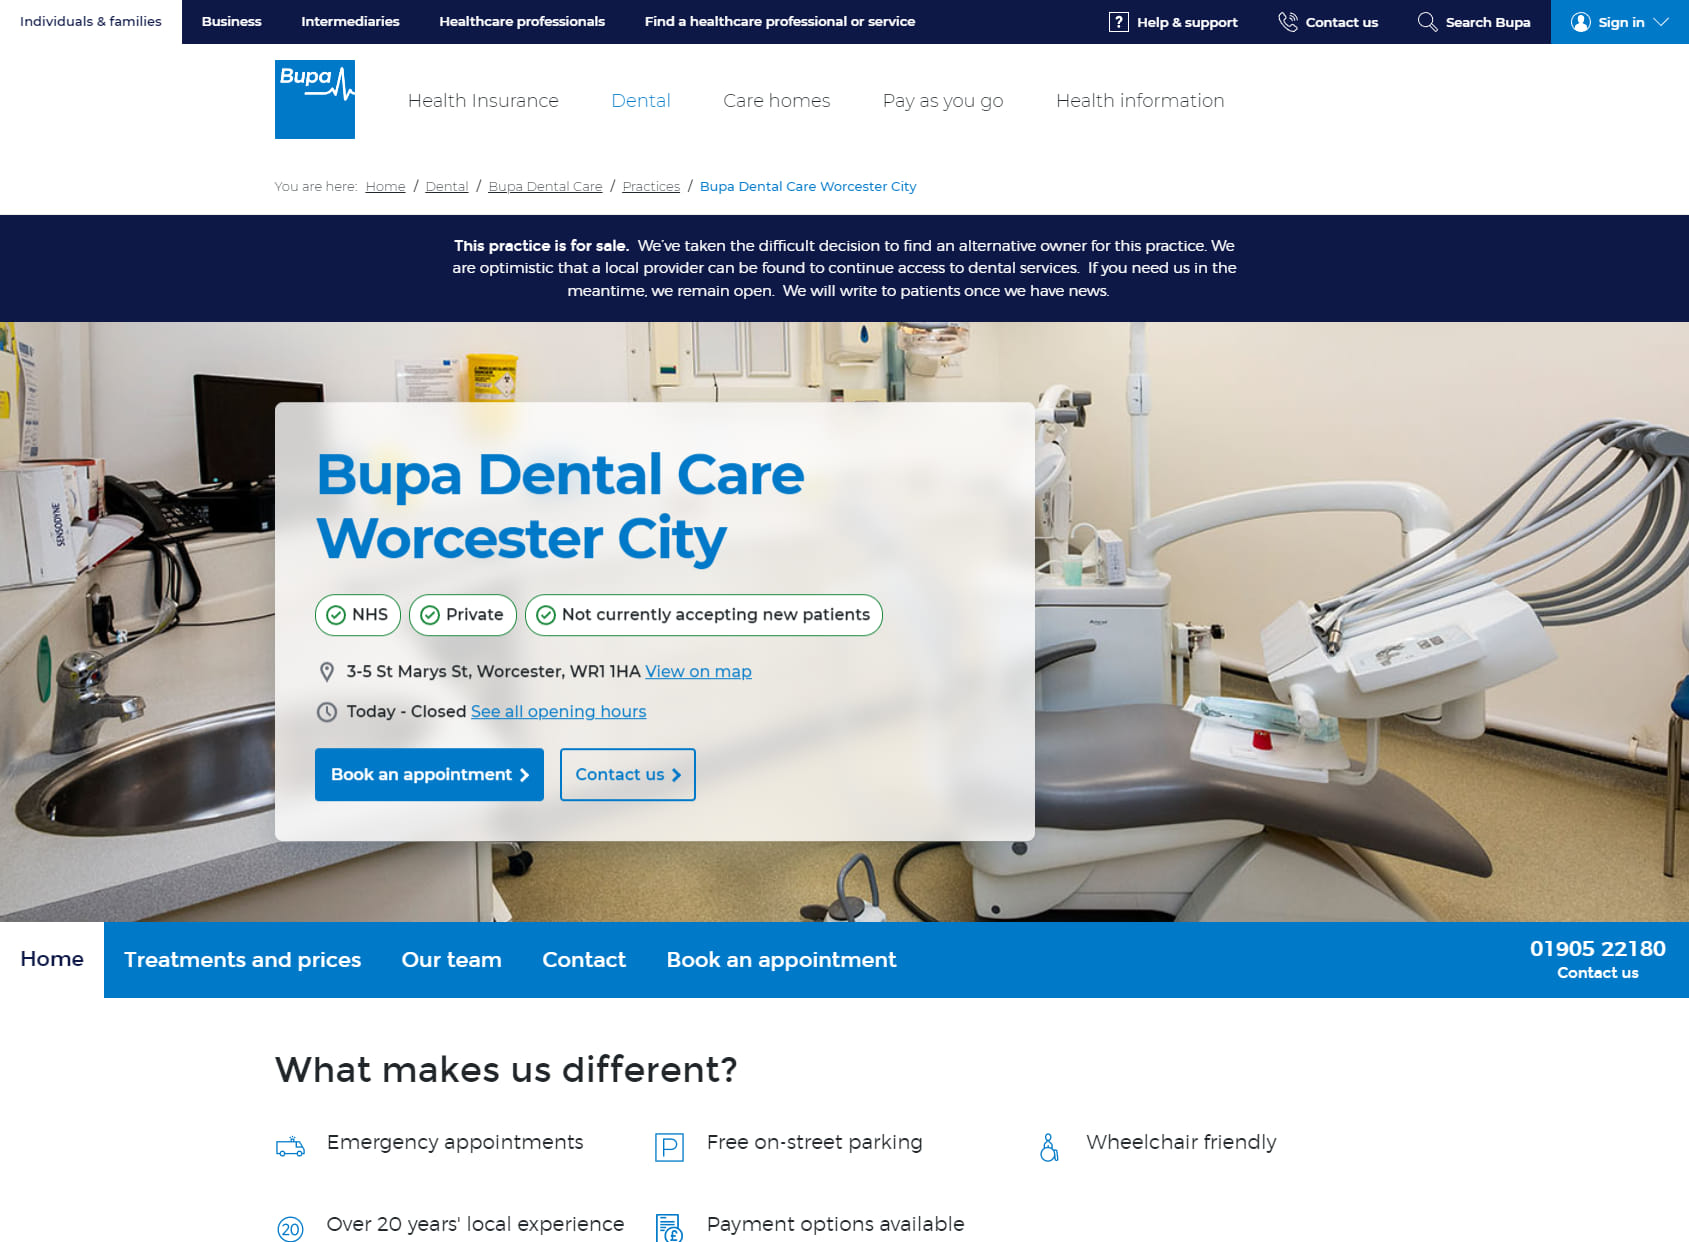 Bupa Dental Care Worcester City